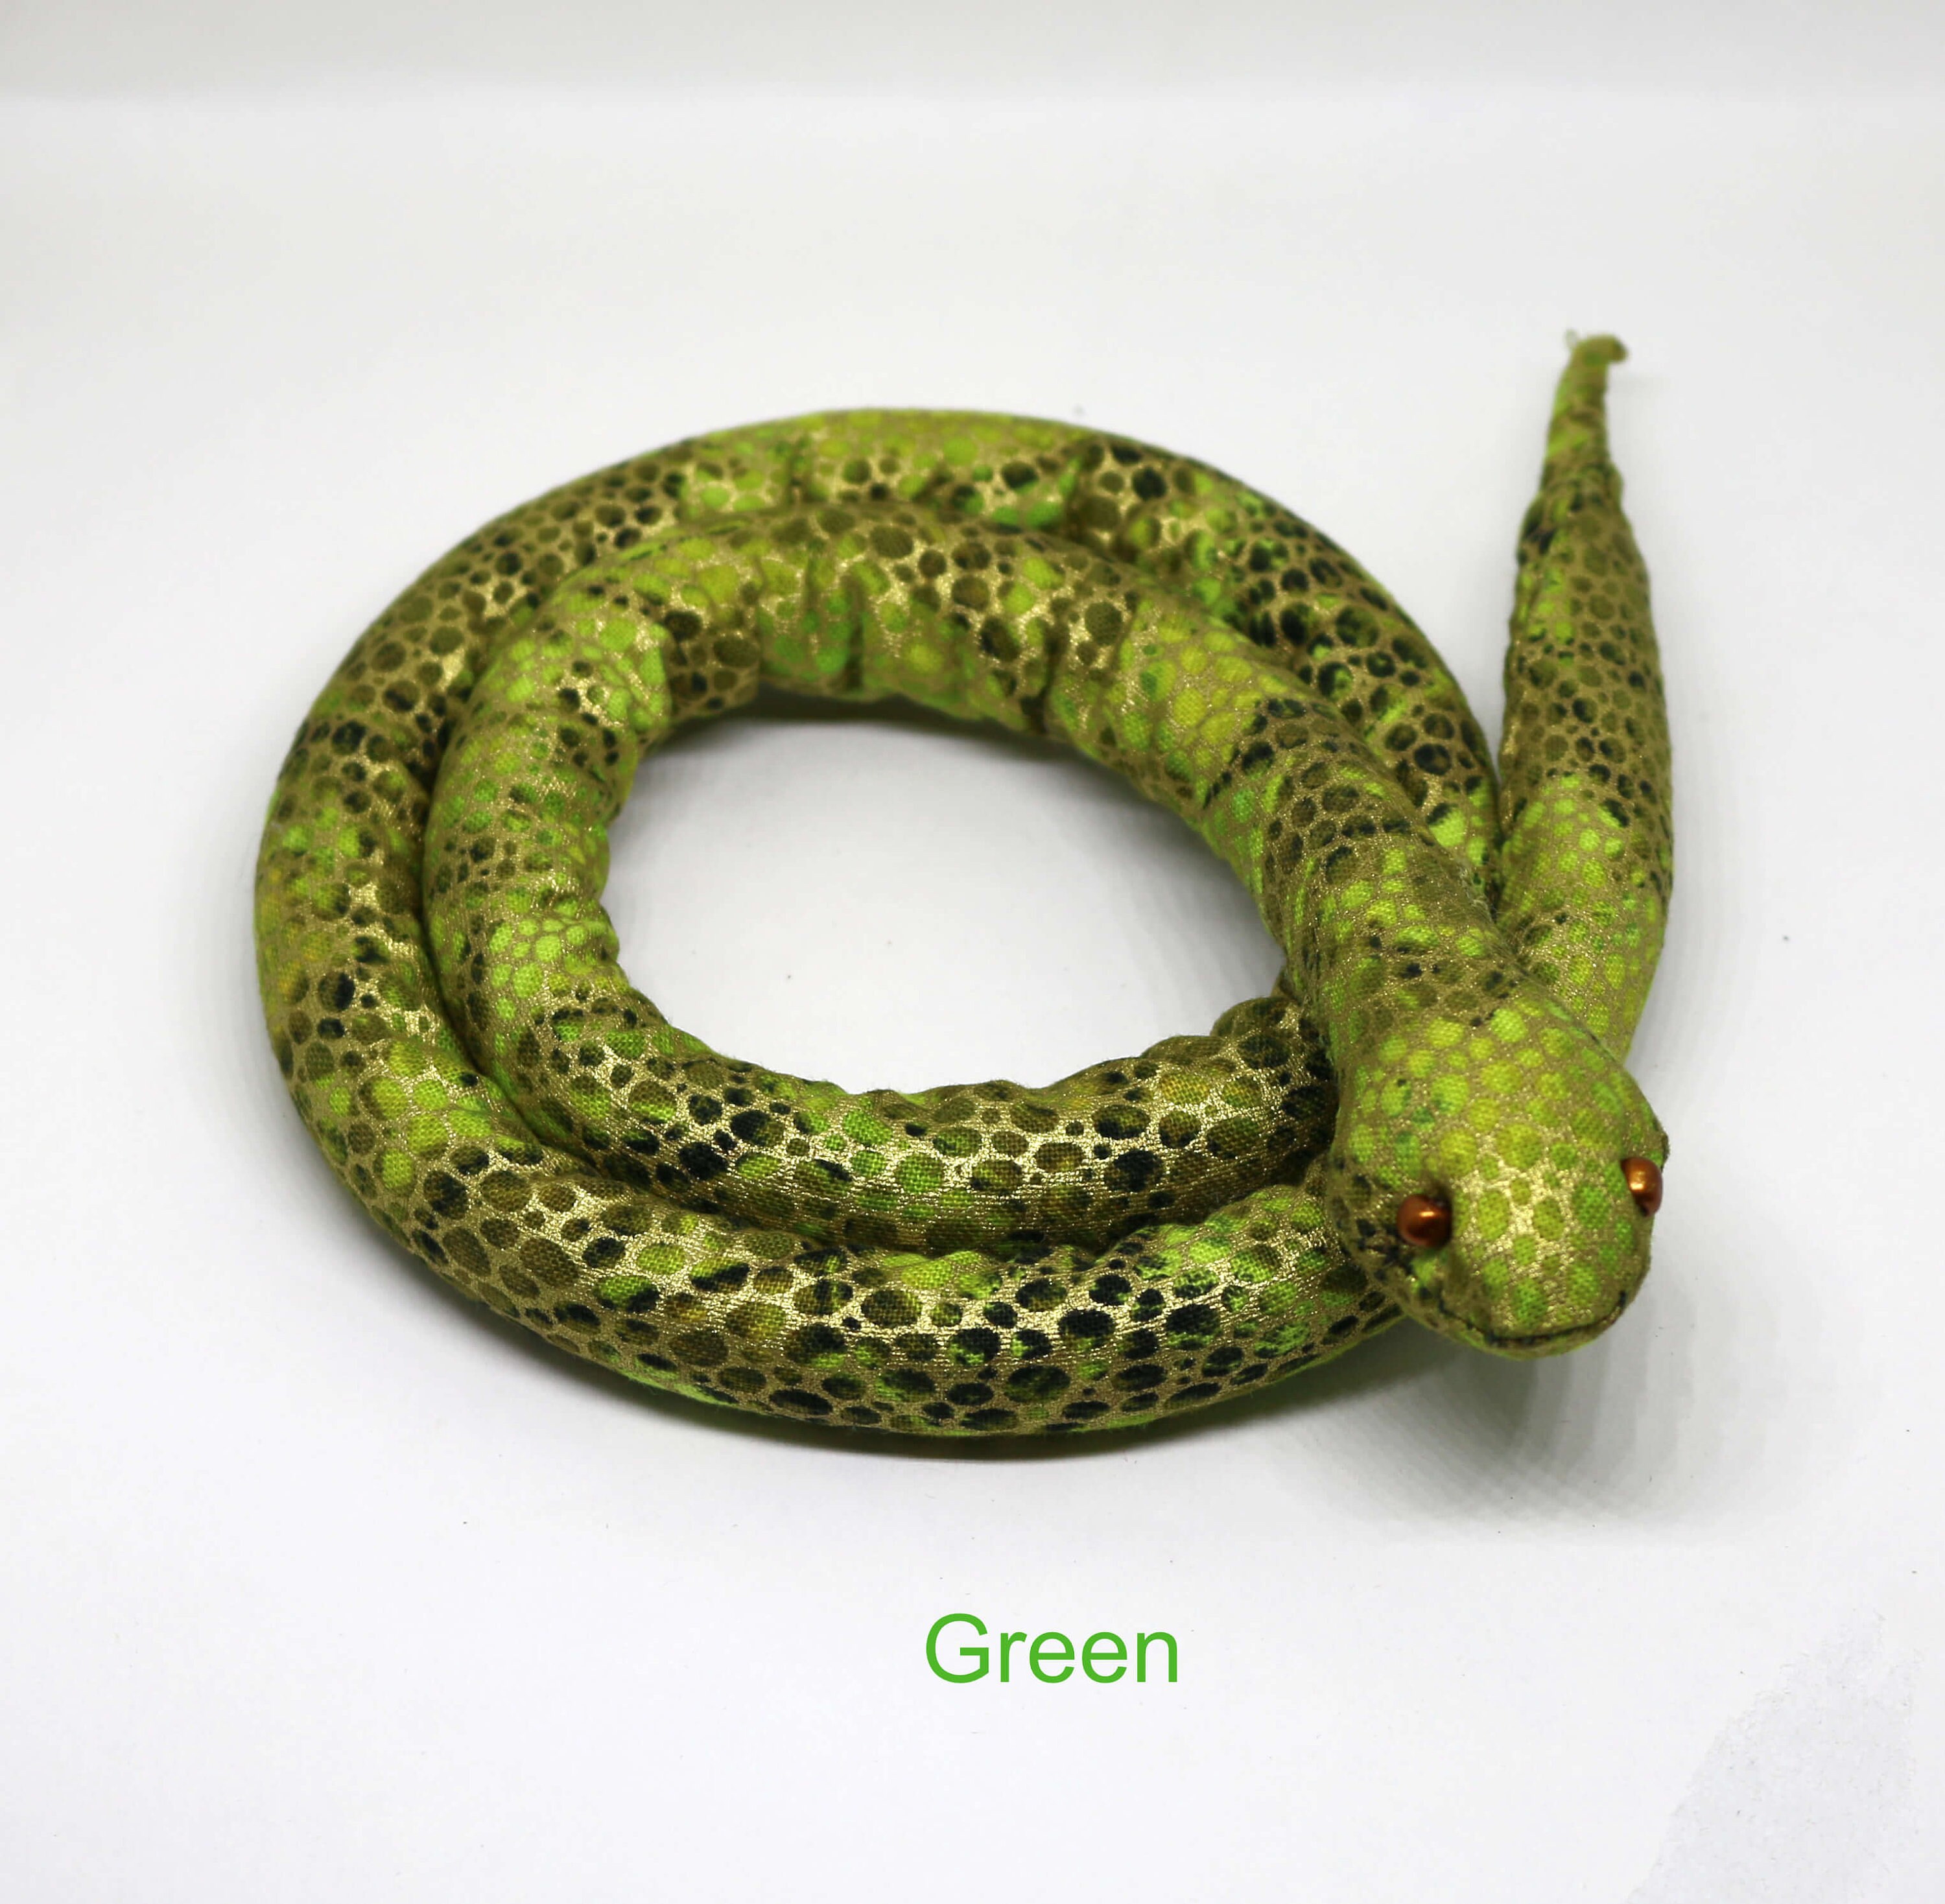 Snakes in your Dreads dread pet. Life-like Snake SpiraLock | Etsy